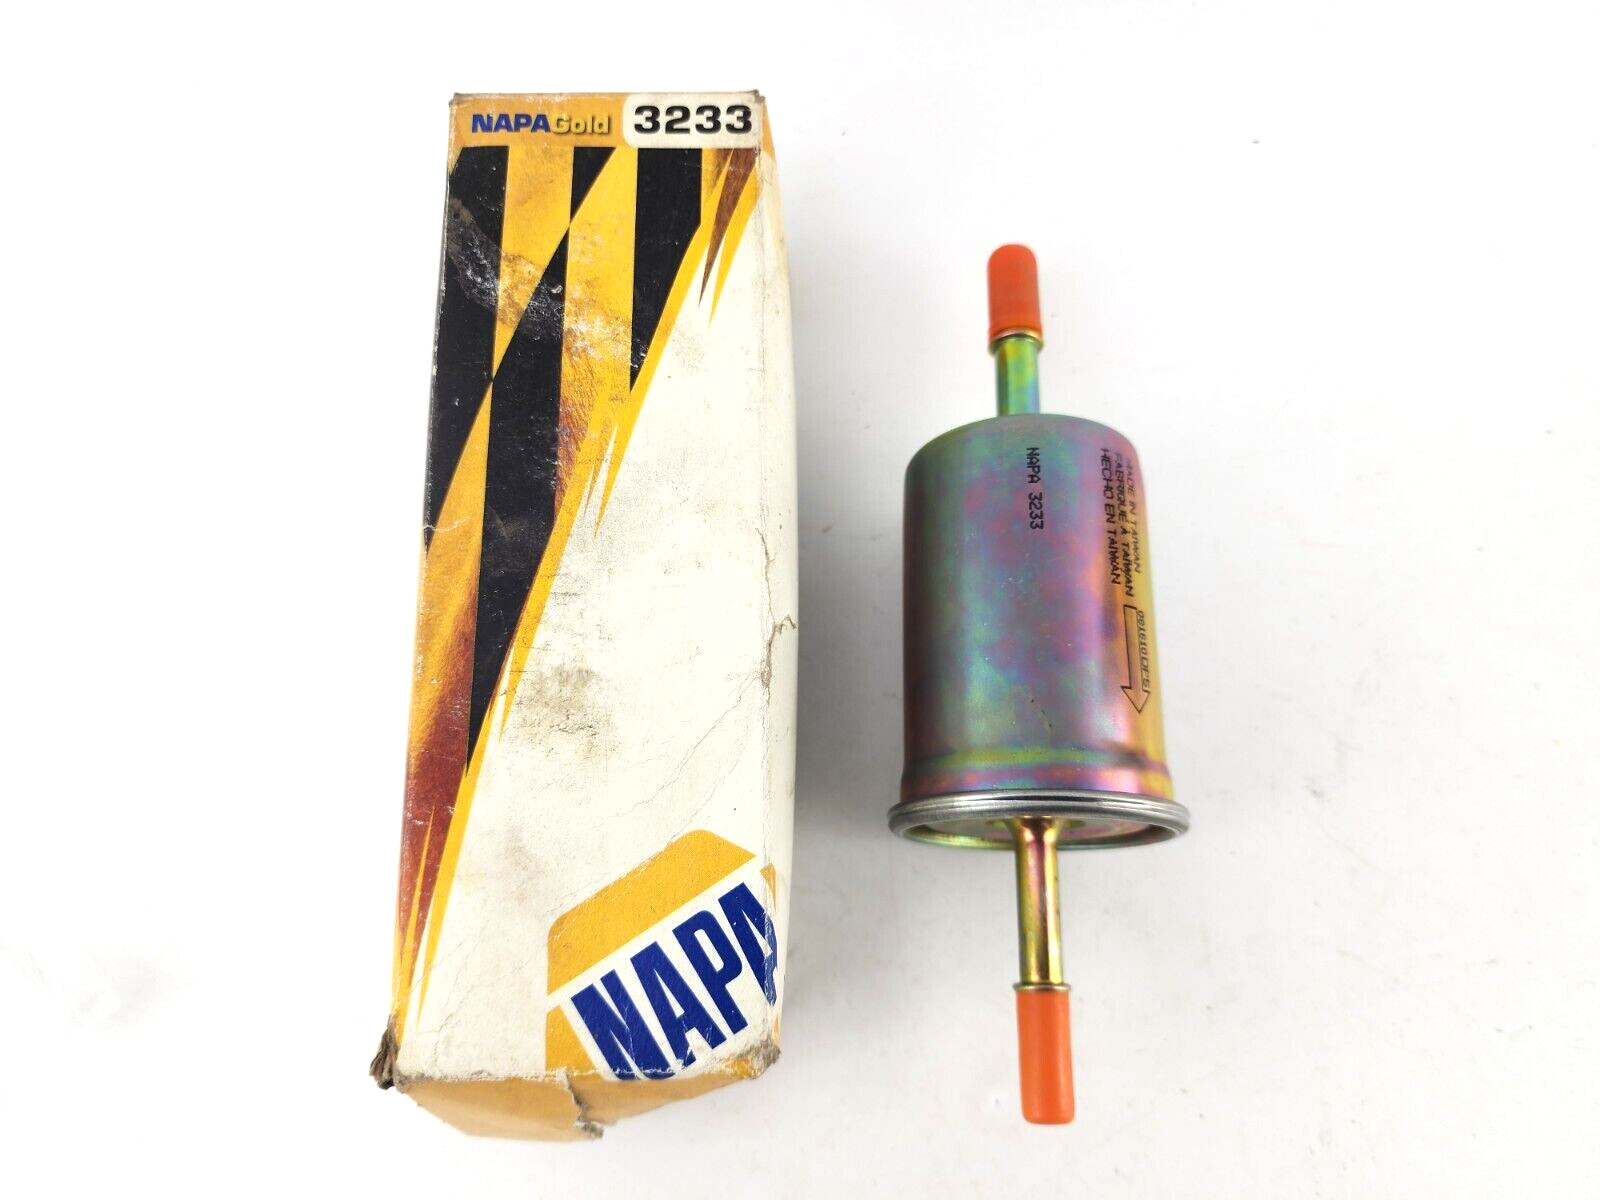 NAPA Gold In-Line Fuel Filter 3233 FG991 BF7960 GF331 33233